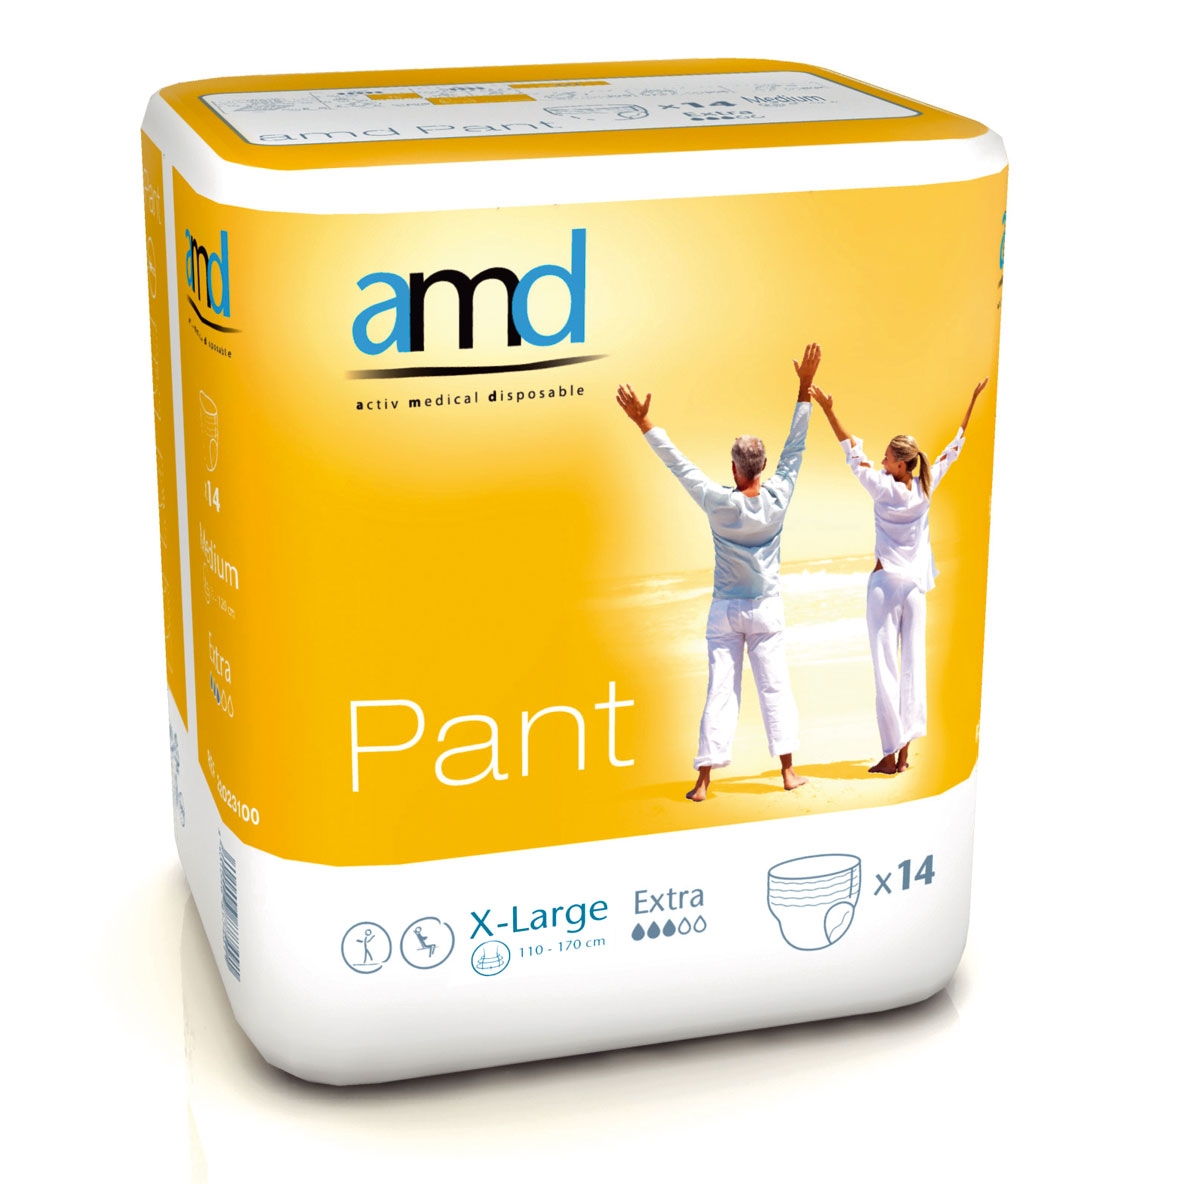 AMD Pant (EXTRA) - Inkontinenzpants - Gr. X-Large (XL) - 14 Stück Beutel